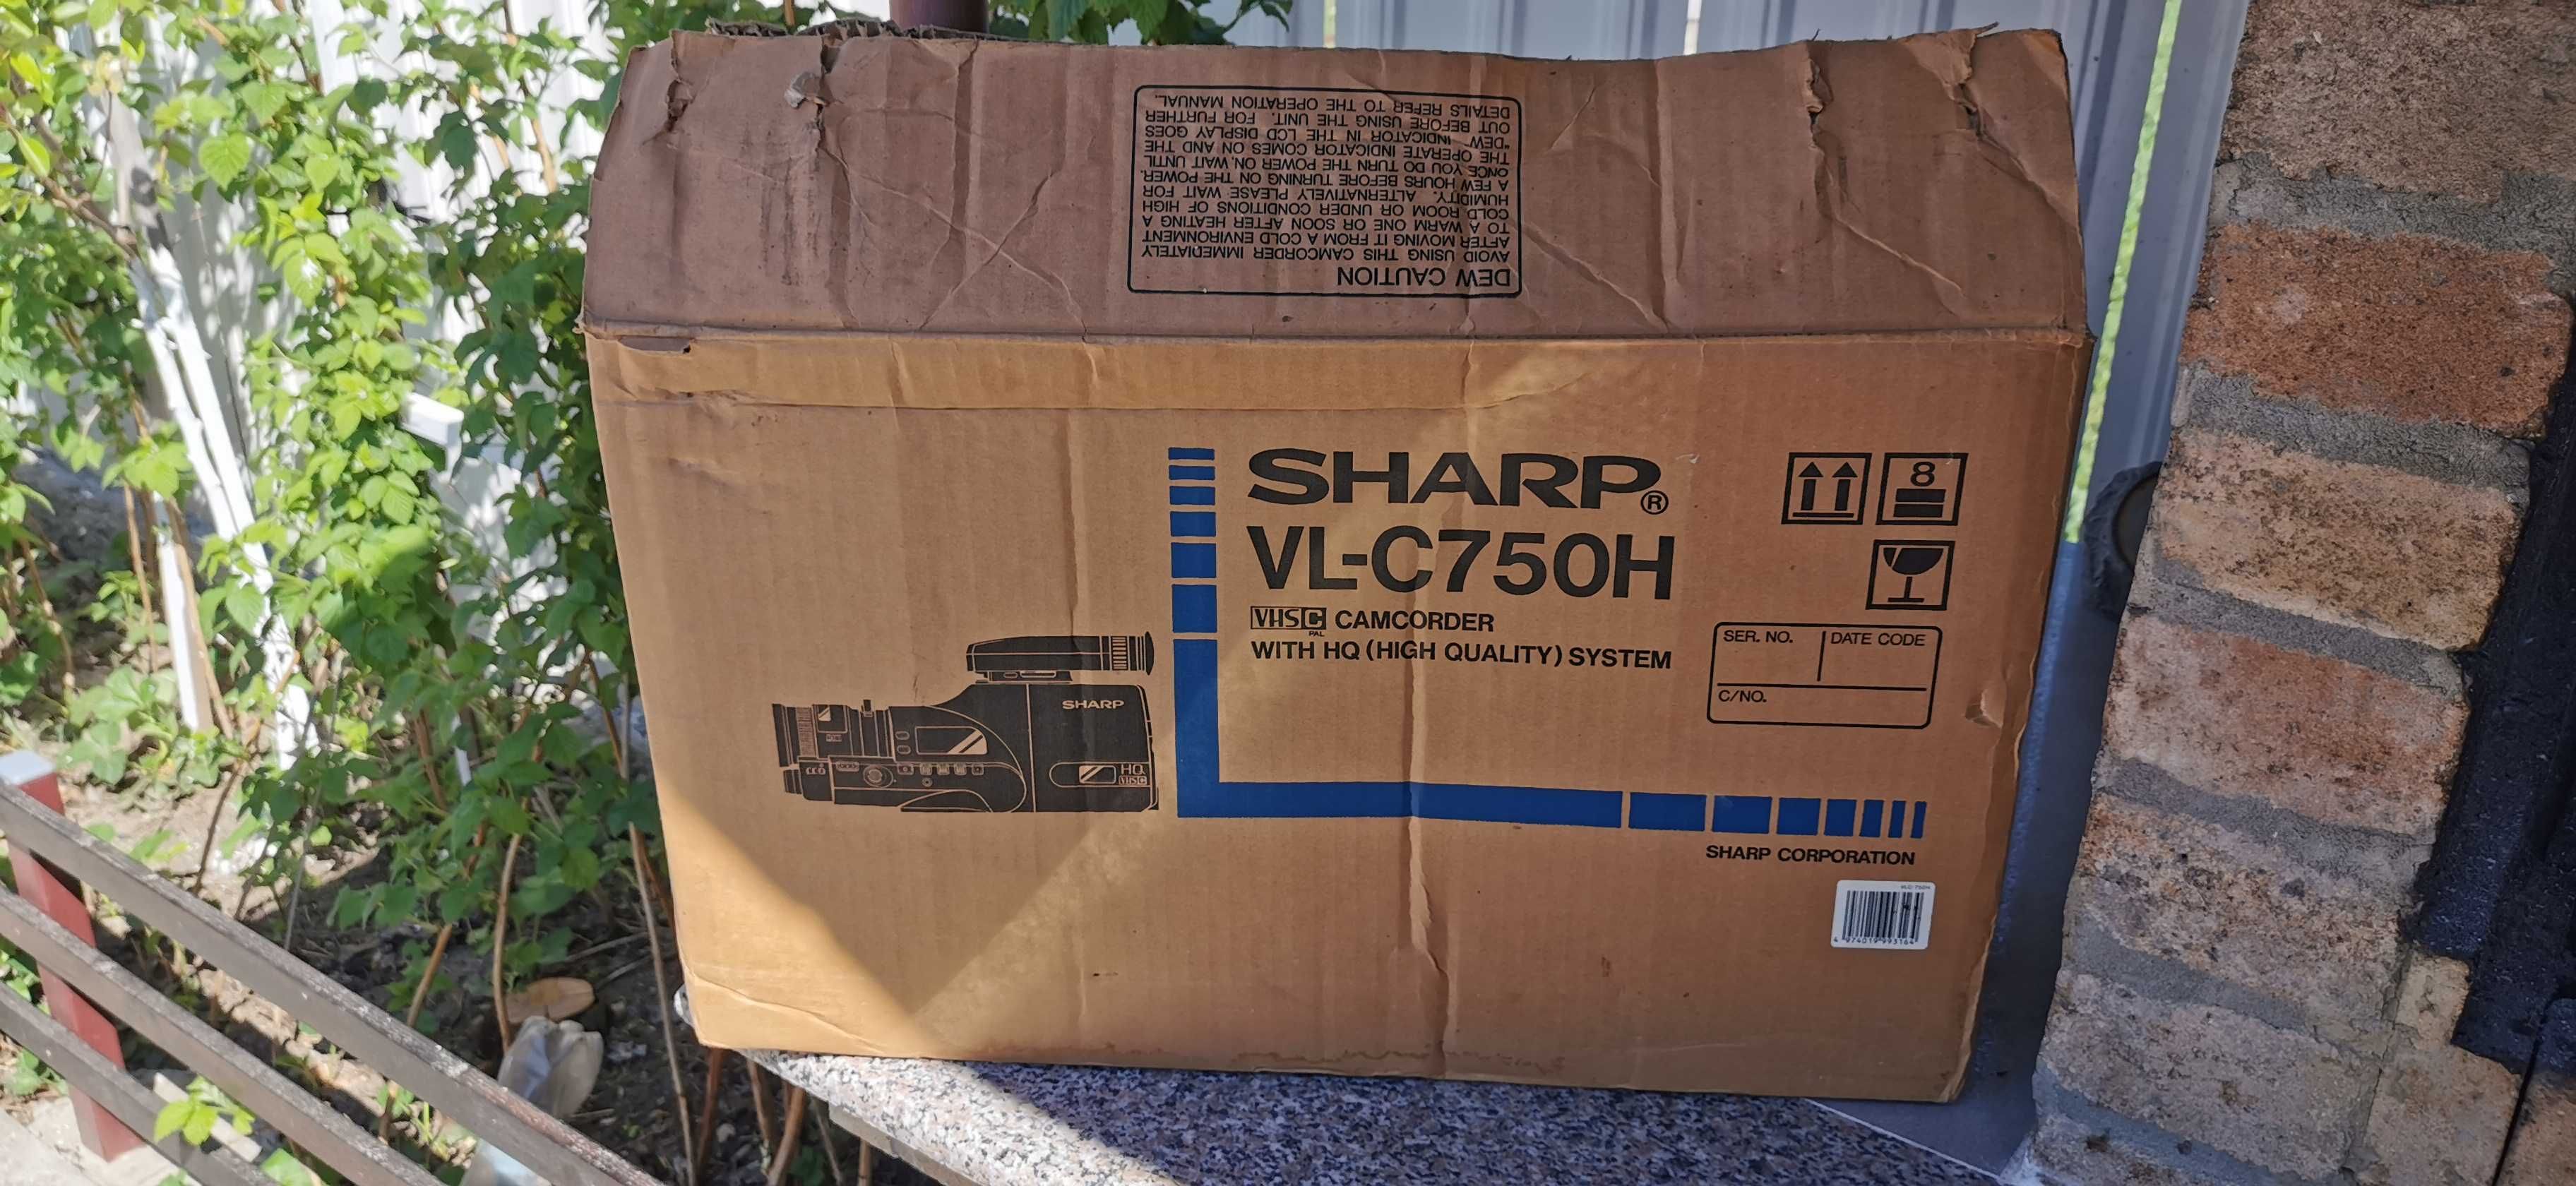 Camera Video Sharp VL-C750H (de colectie)